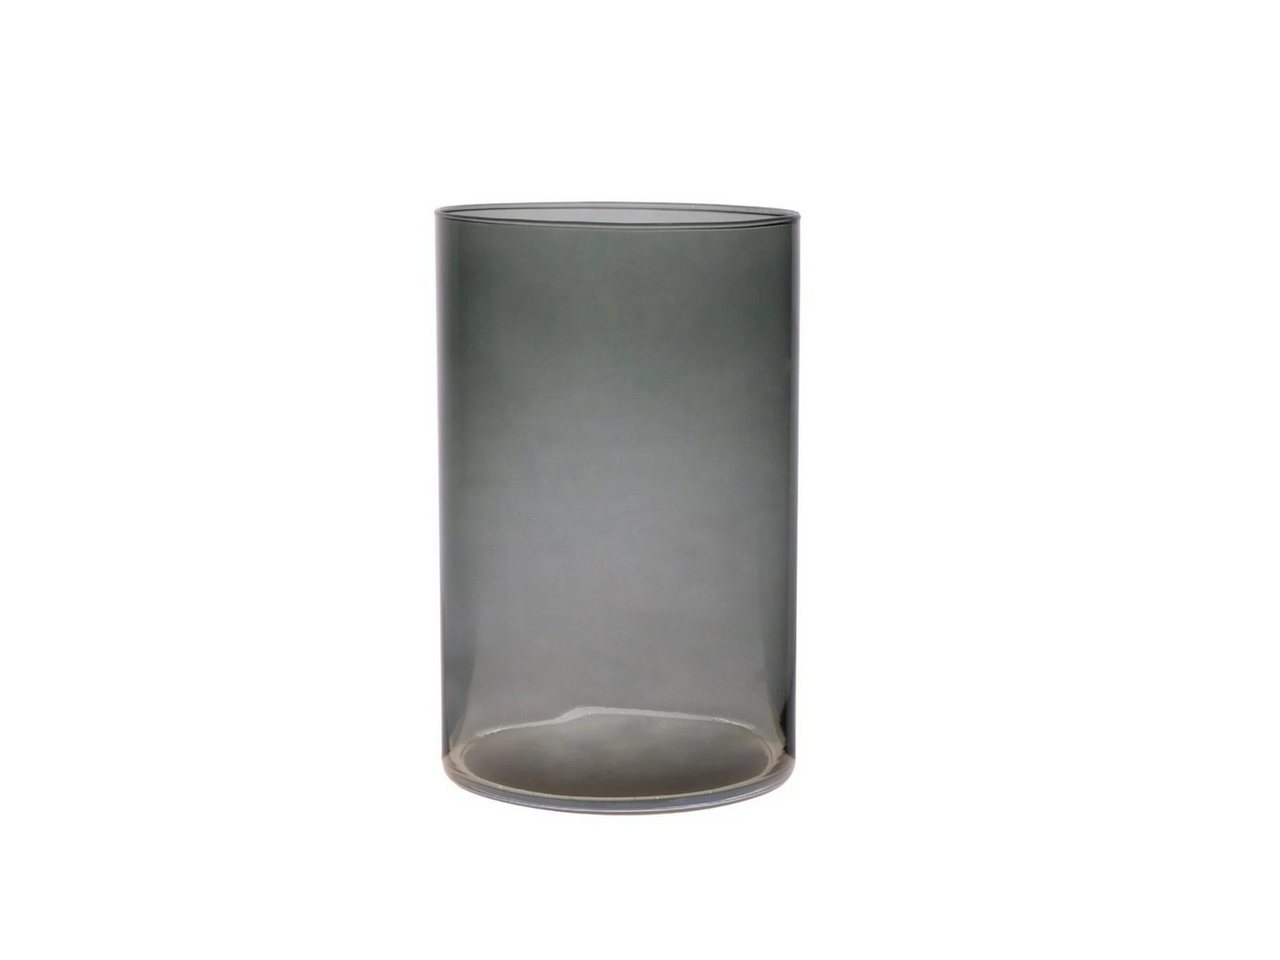 Hakbijl Glass Deko-Glas, Grau H:19cm D:14cm Glas von Hakbijl Glass